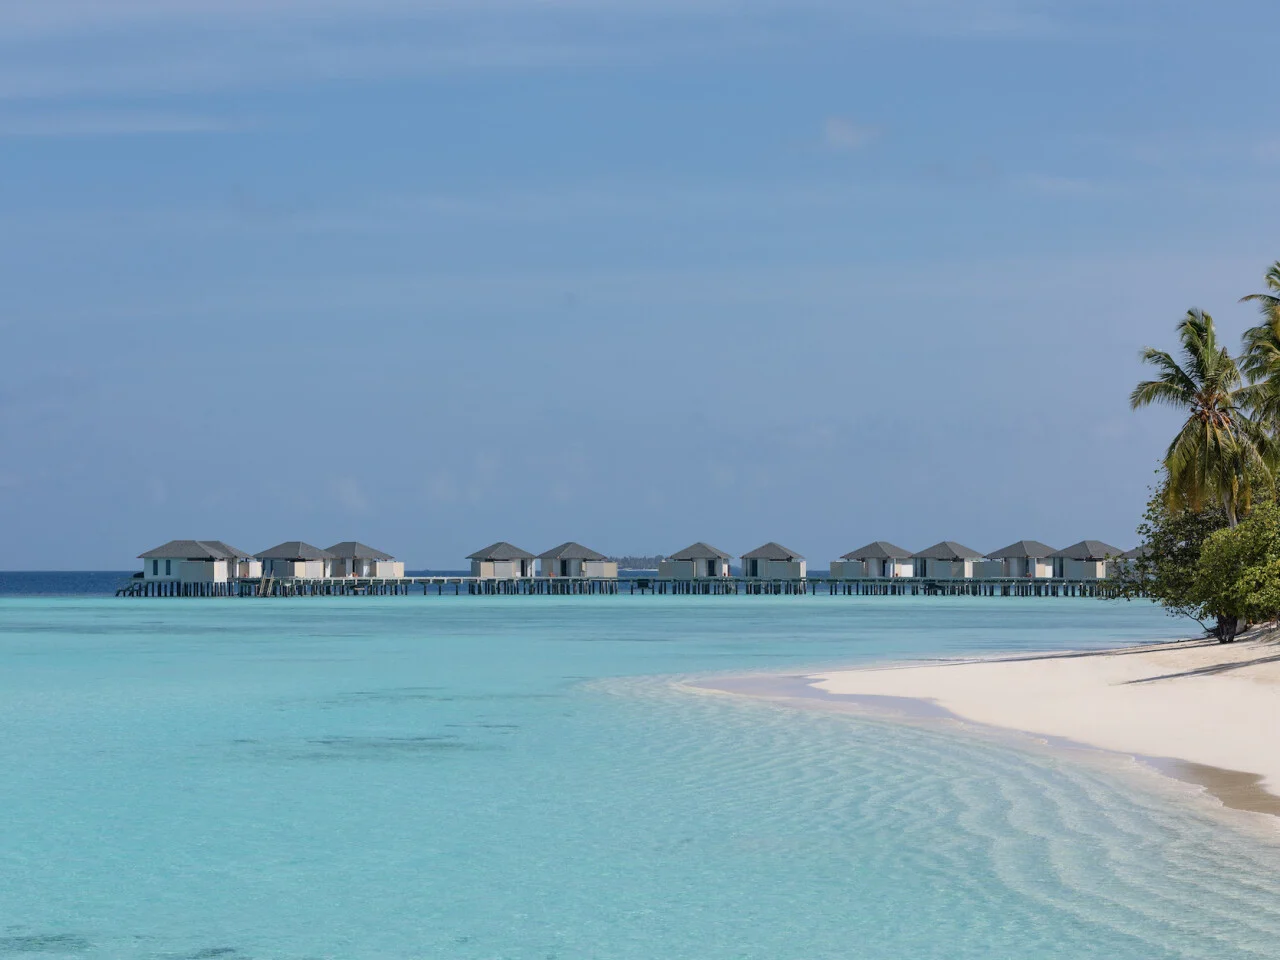 Nh Collection Maldives Havodda Resort - Gaafu Dhaalu Atoll